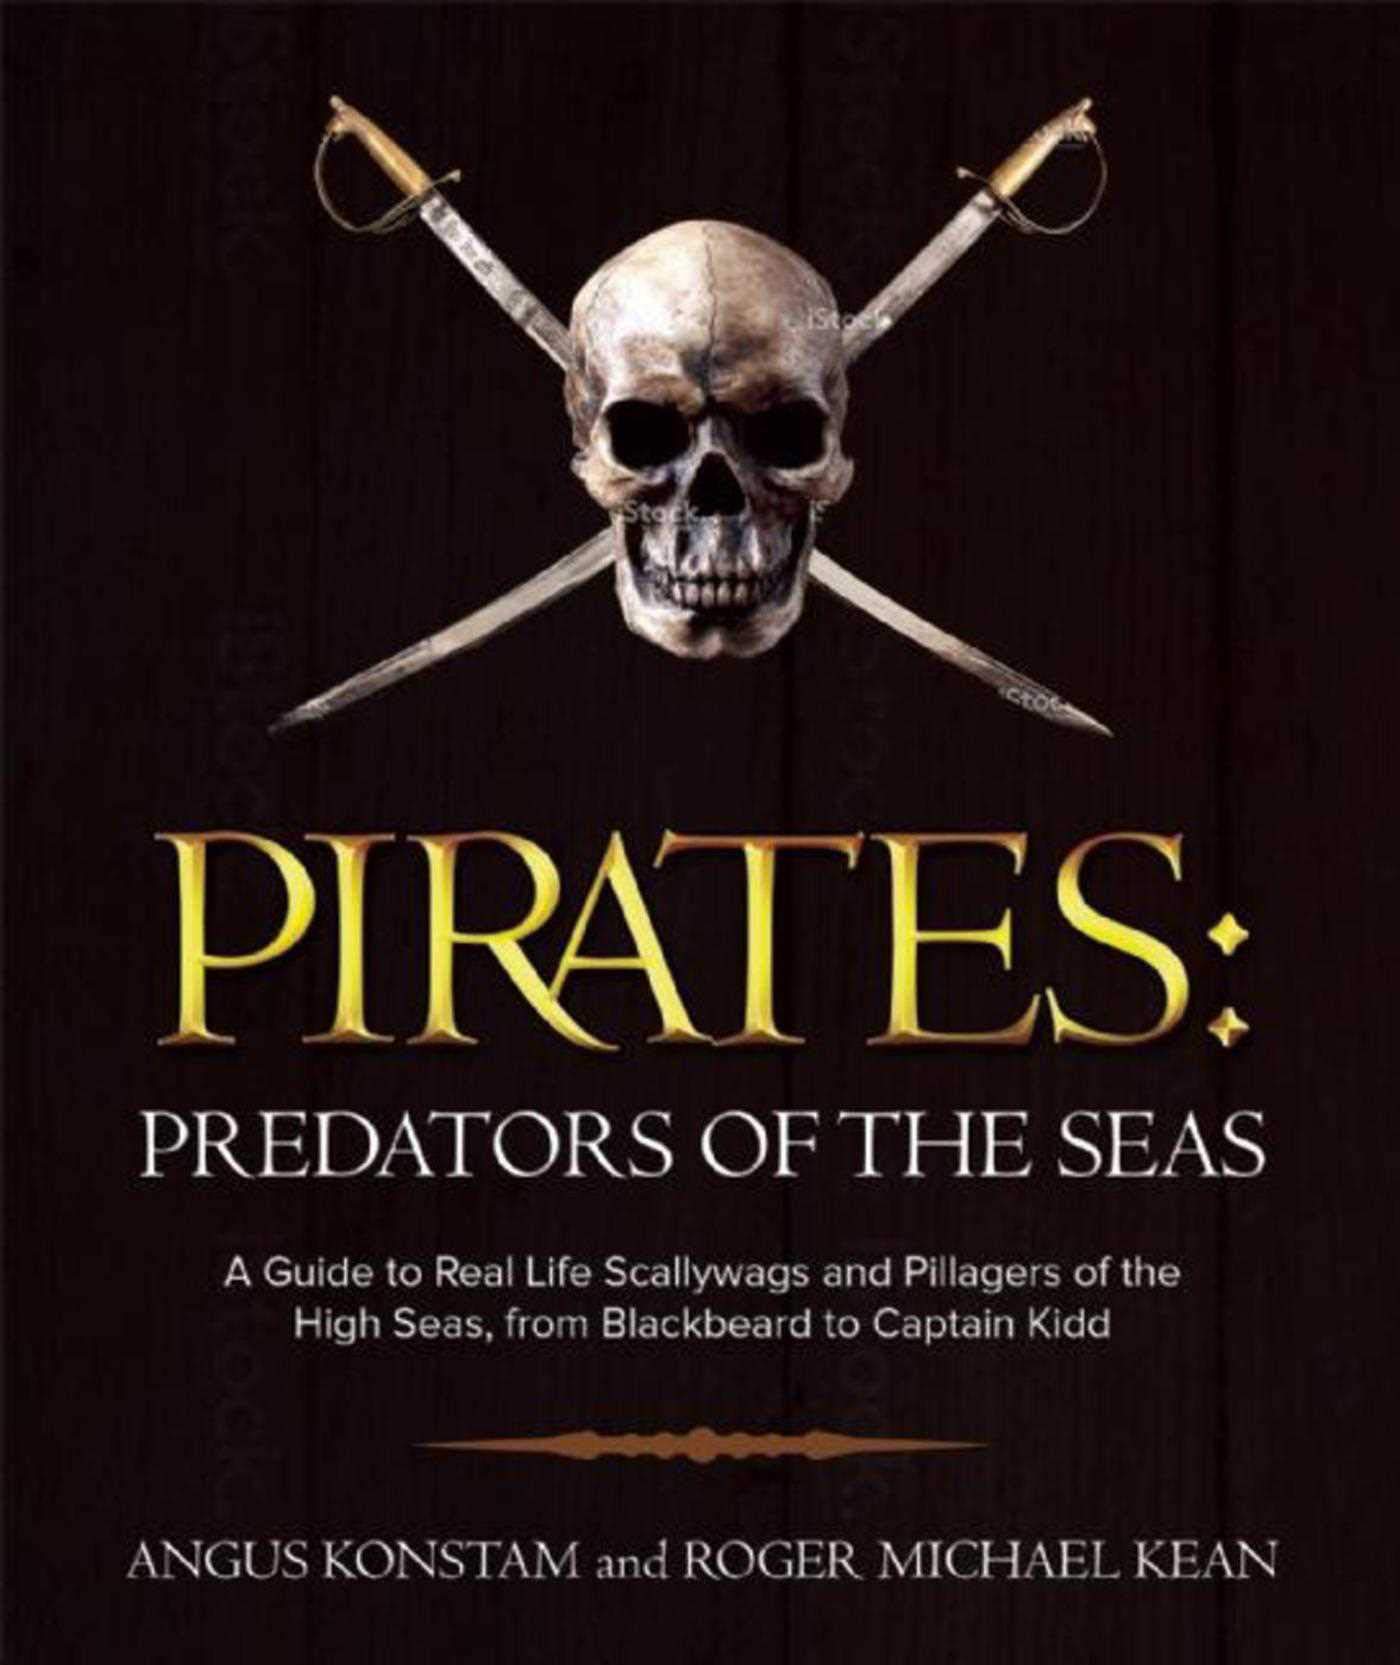 Pirates: Predators of the Seas Book Preview